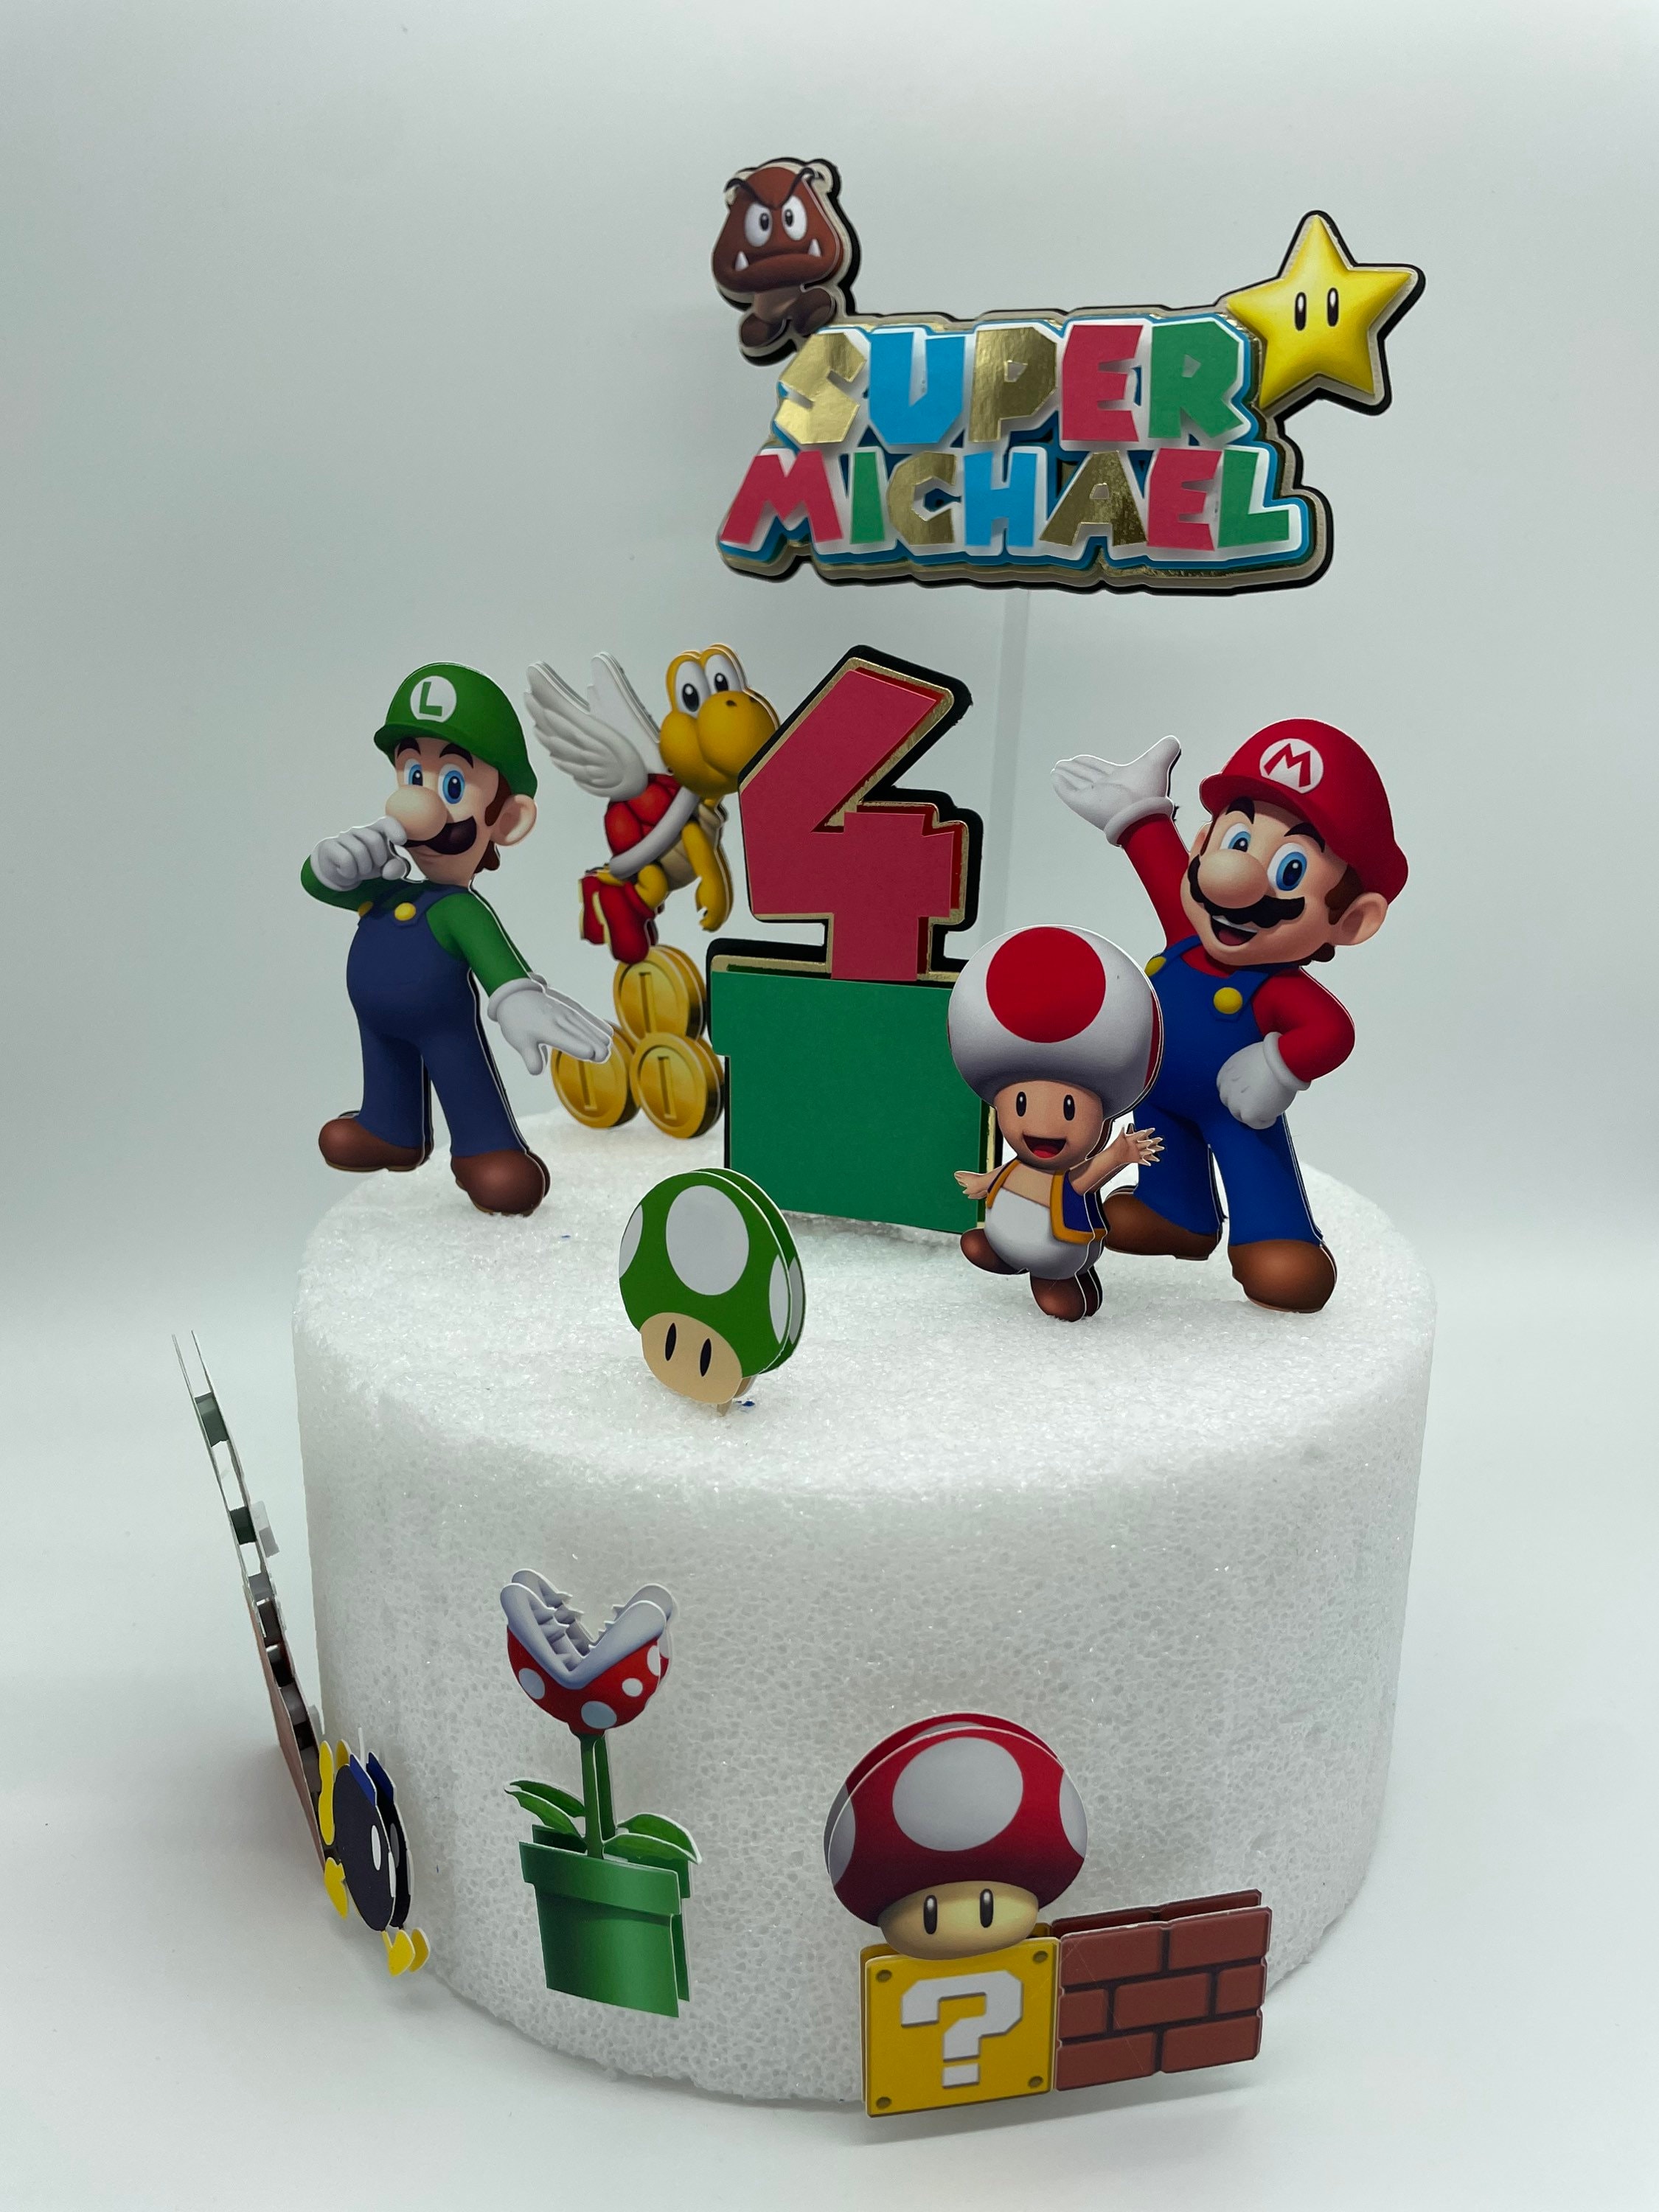 Power Ranger Cake - Decorated Cake by JB - CakesDecor